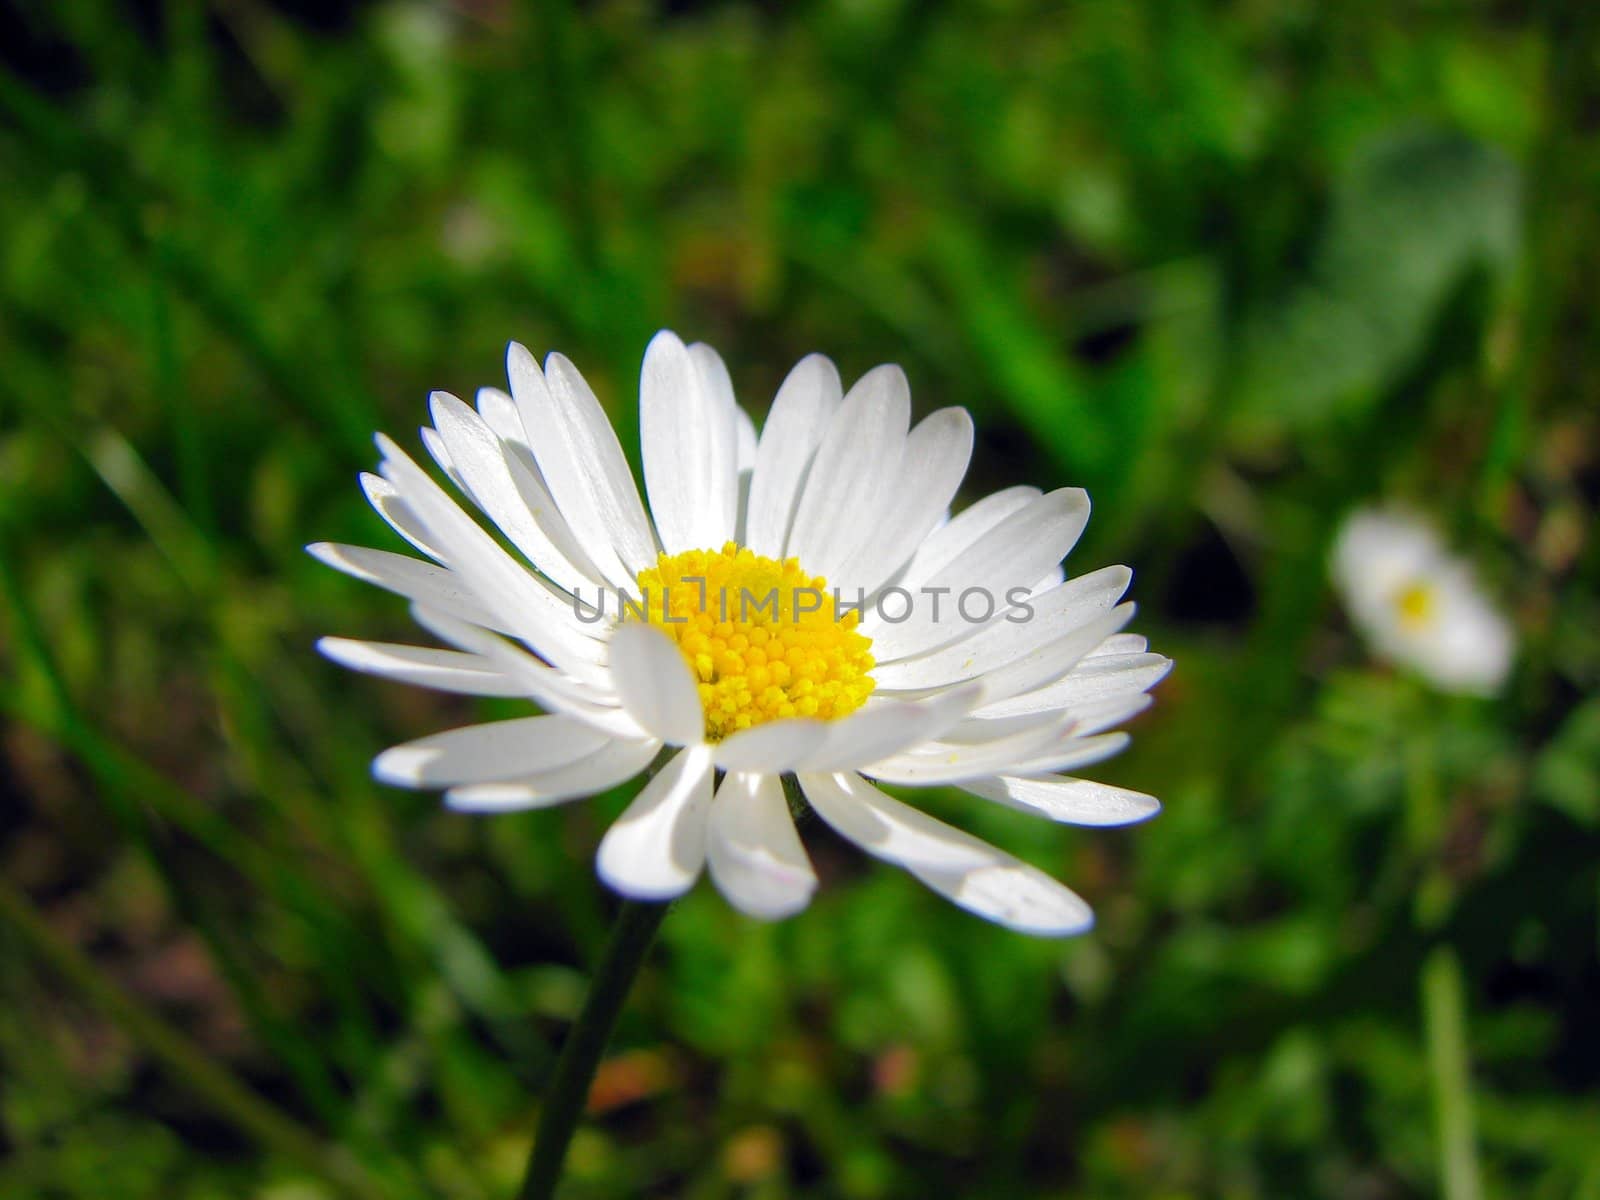 beautiful white daisy in the green garden